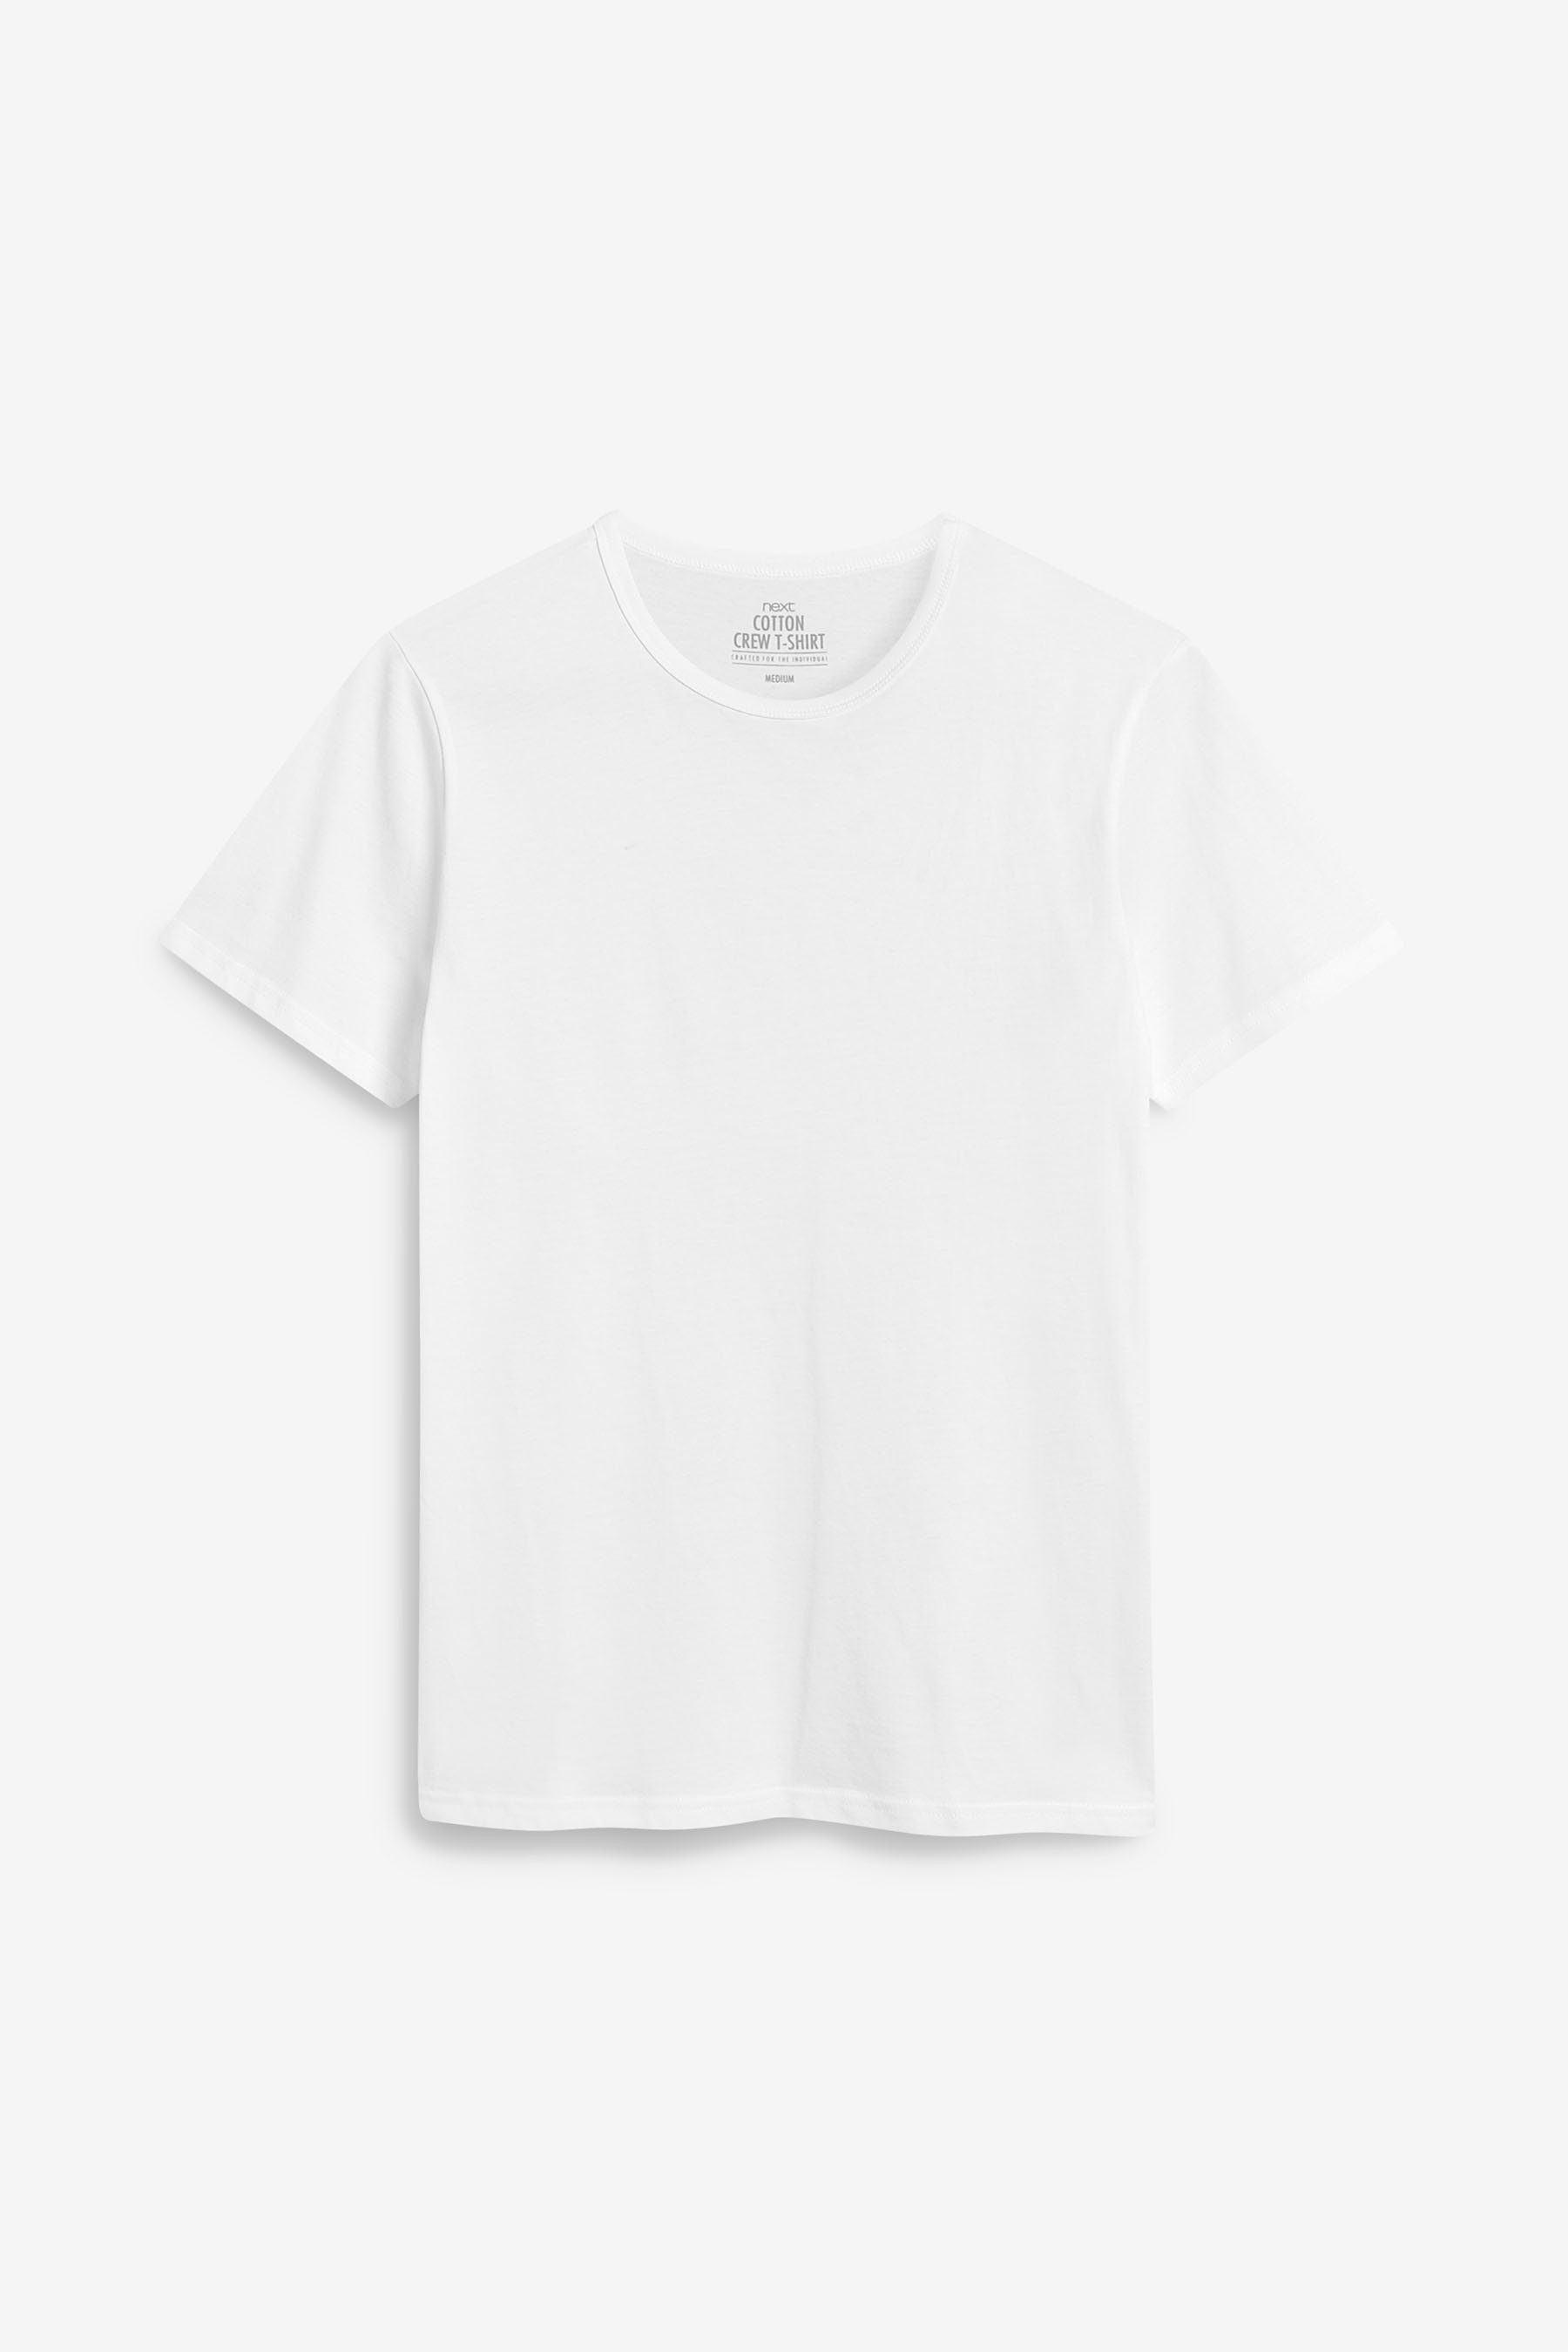 Burgundy Red/Black/White/Blue/Grey Next Marl T-Shirts (5-St) Unterhemd 5er-Pack